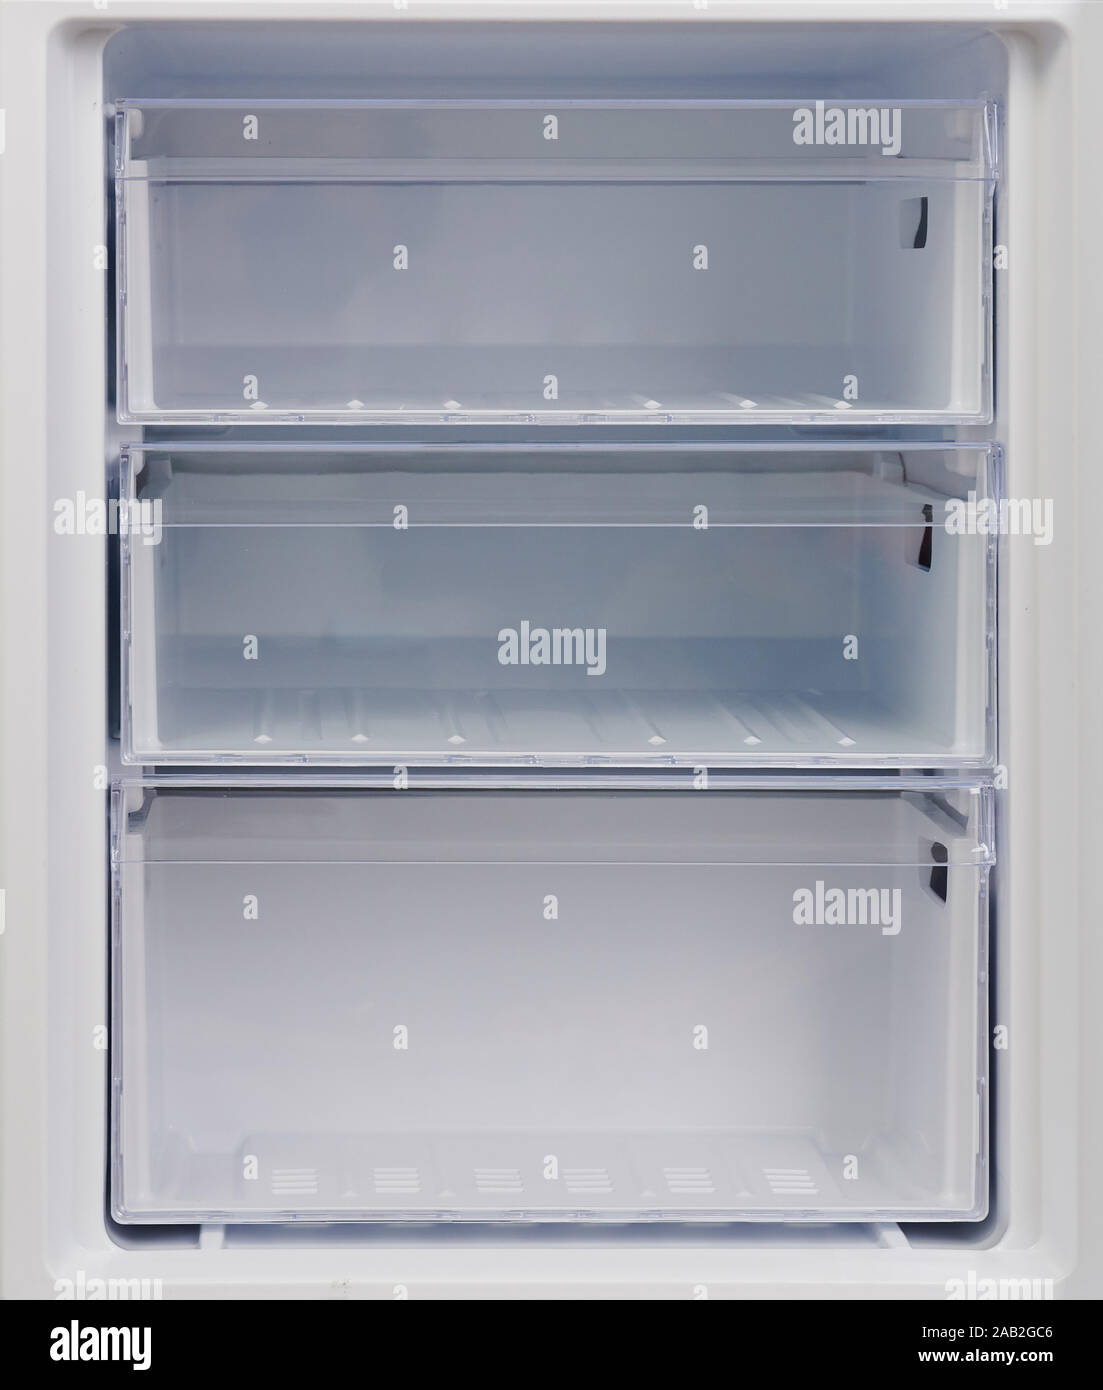 Refrigerator freezer compartment. Clean empty plastic rack Stock Photo